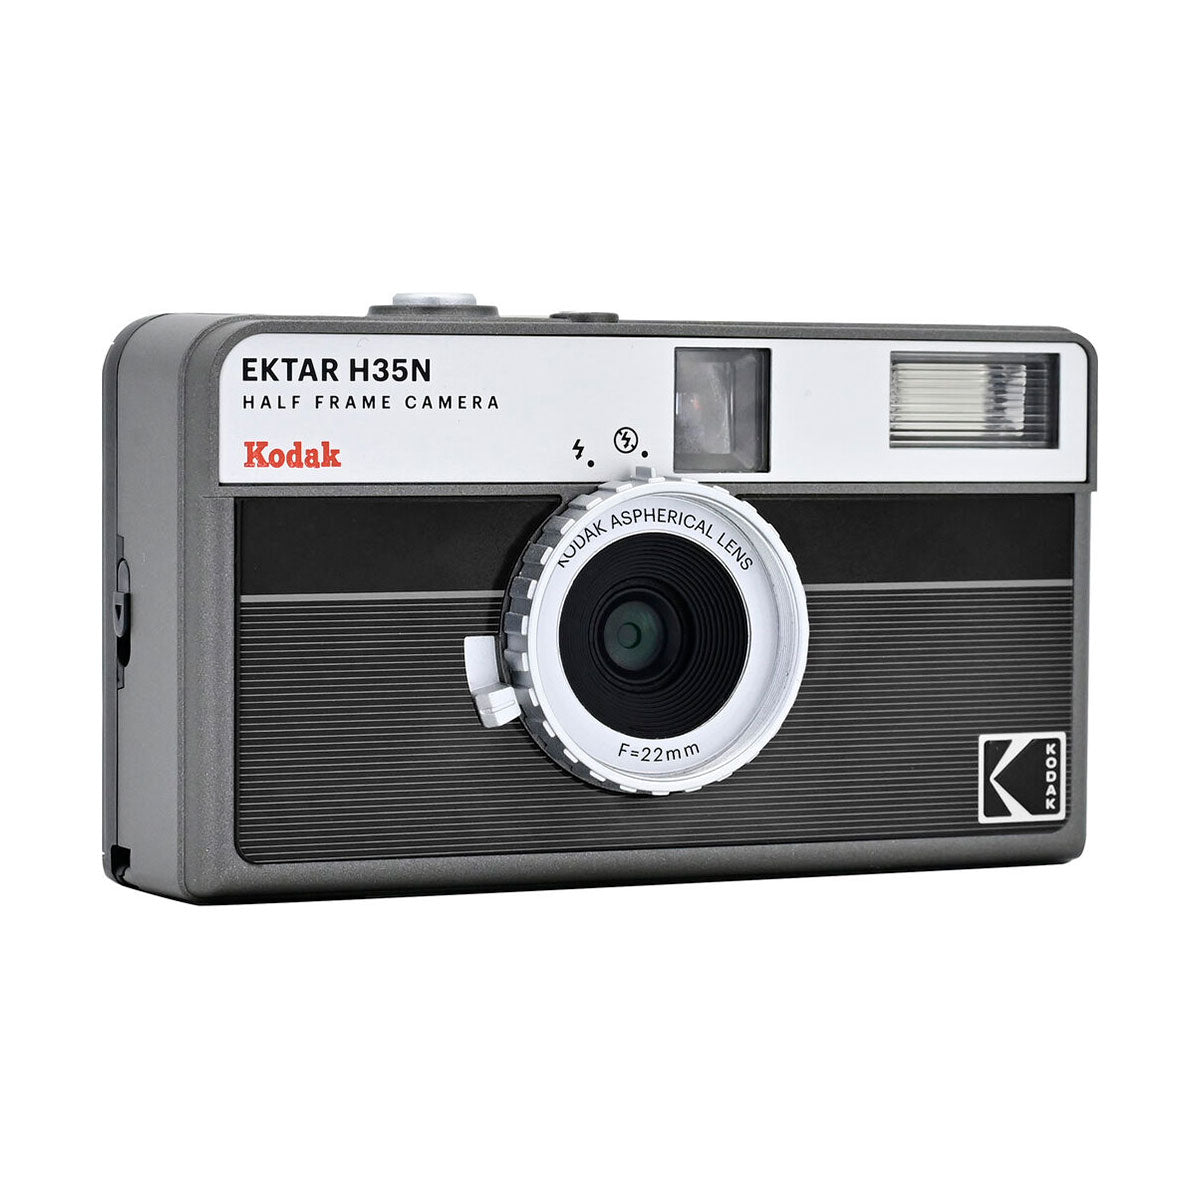 Kodak H35N 1/2 Frame Film Camera - Black